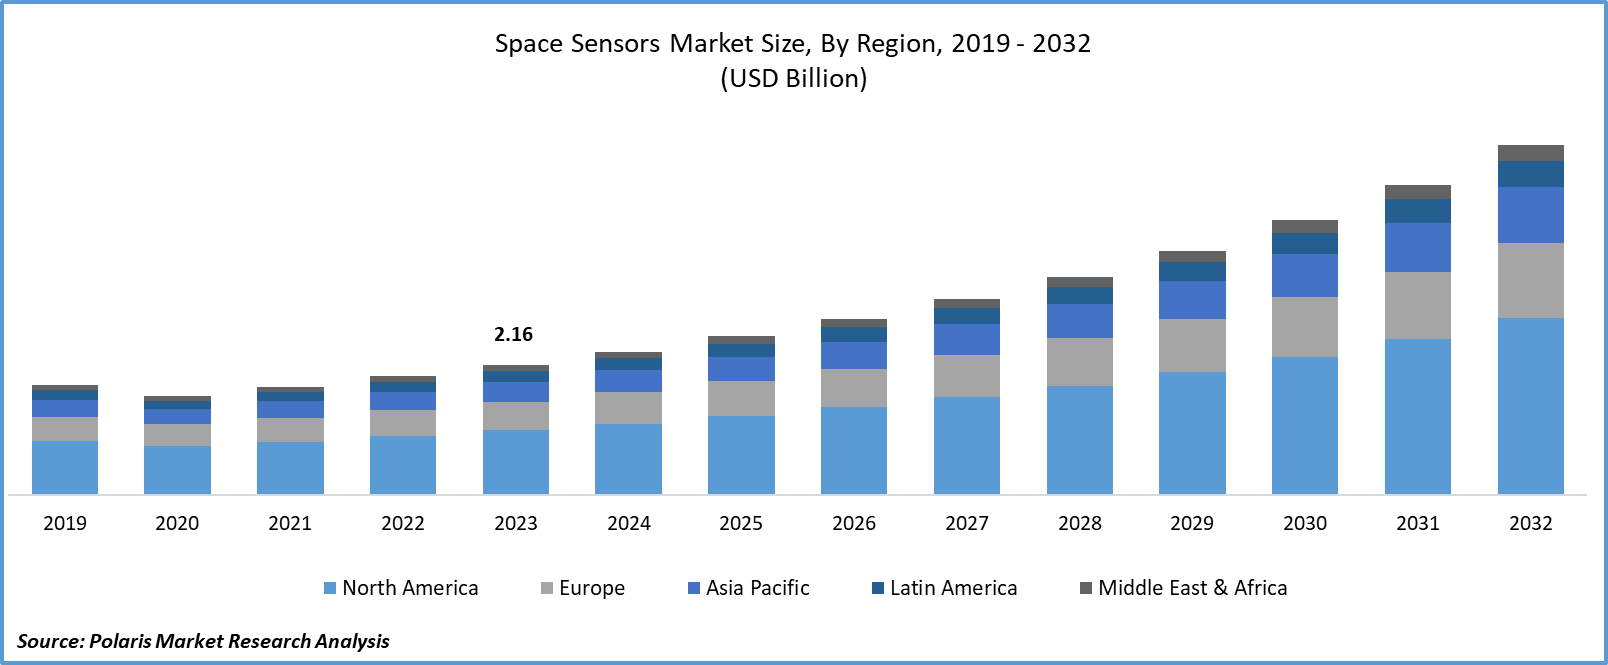 Space Sensors Market Size